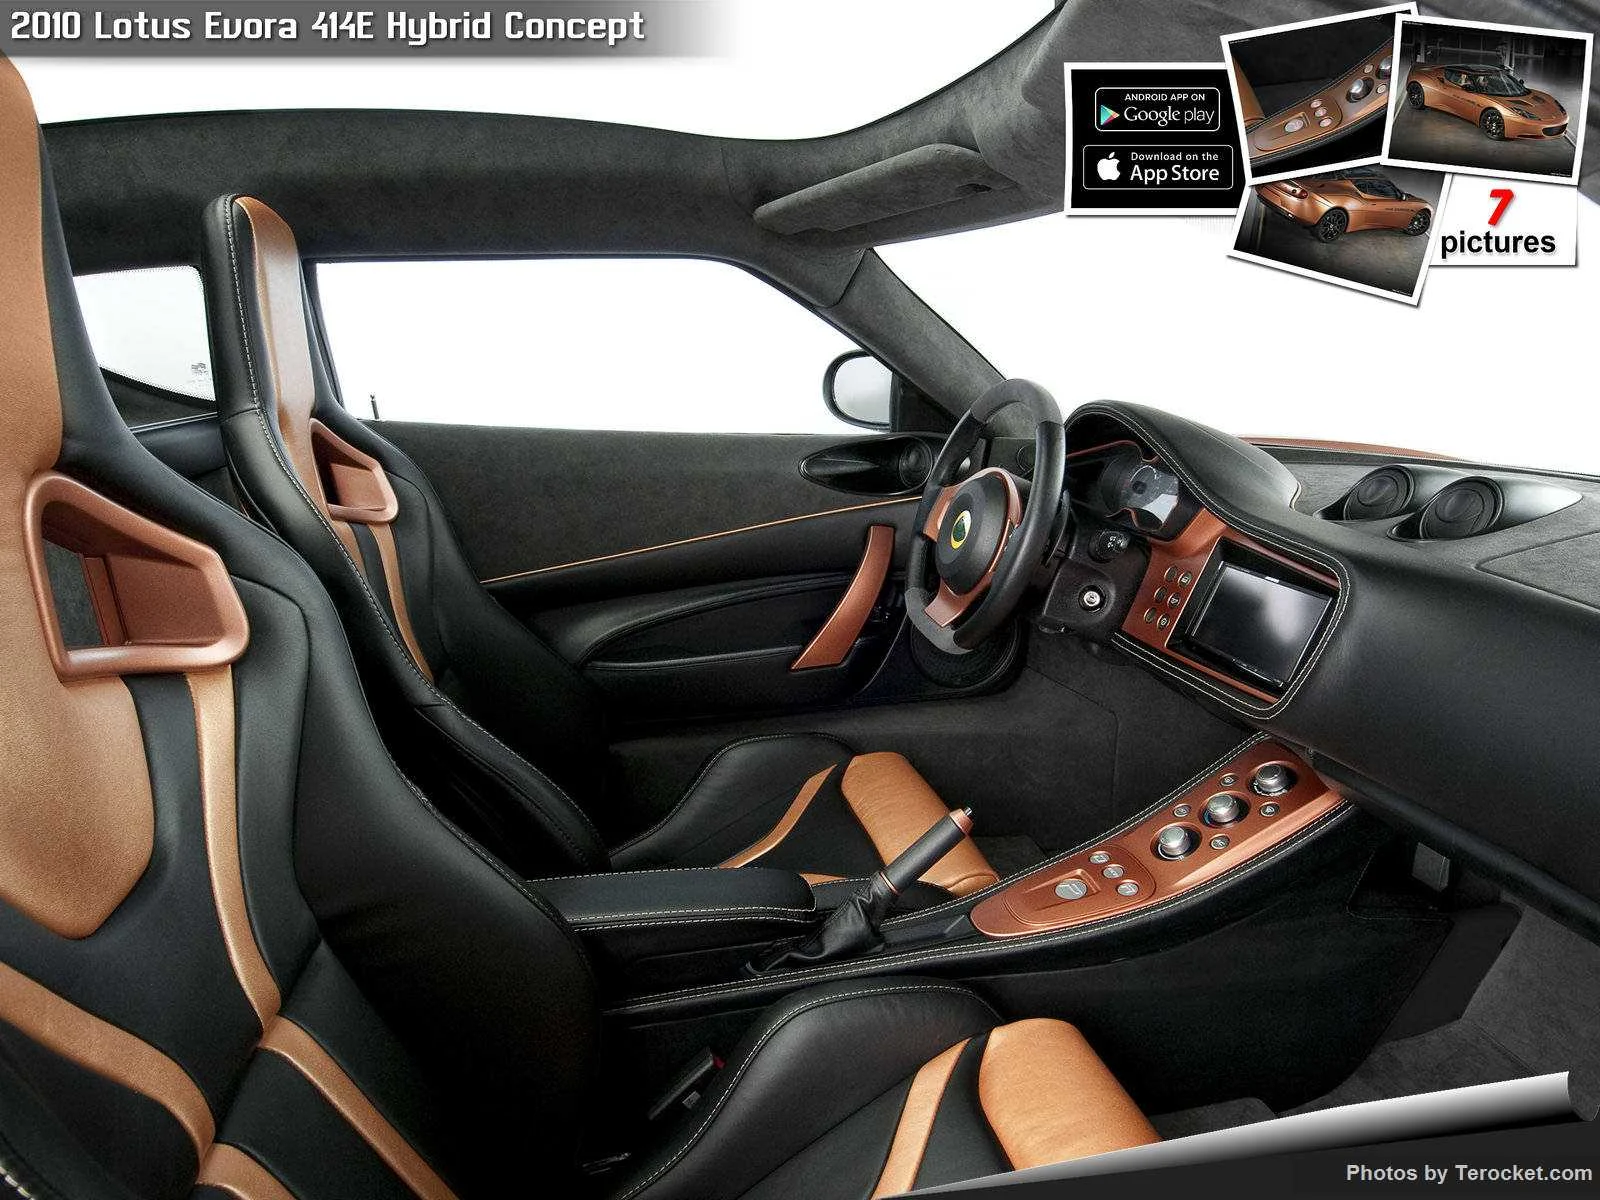 Hình ảnh siêu xe Lotus Evora 414E Hybrid Concept 2010 & nội ngoại thất